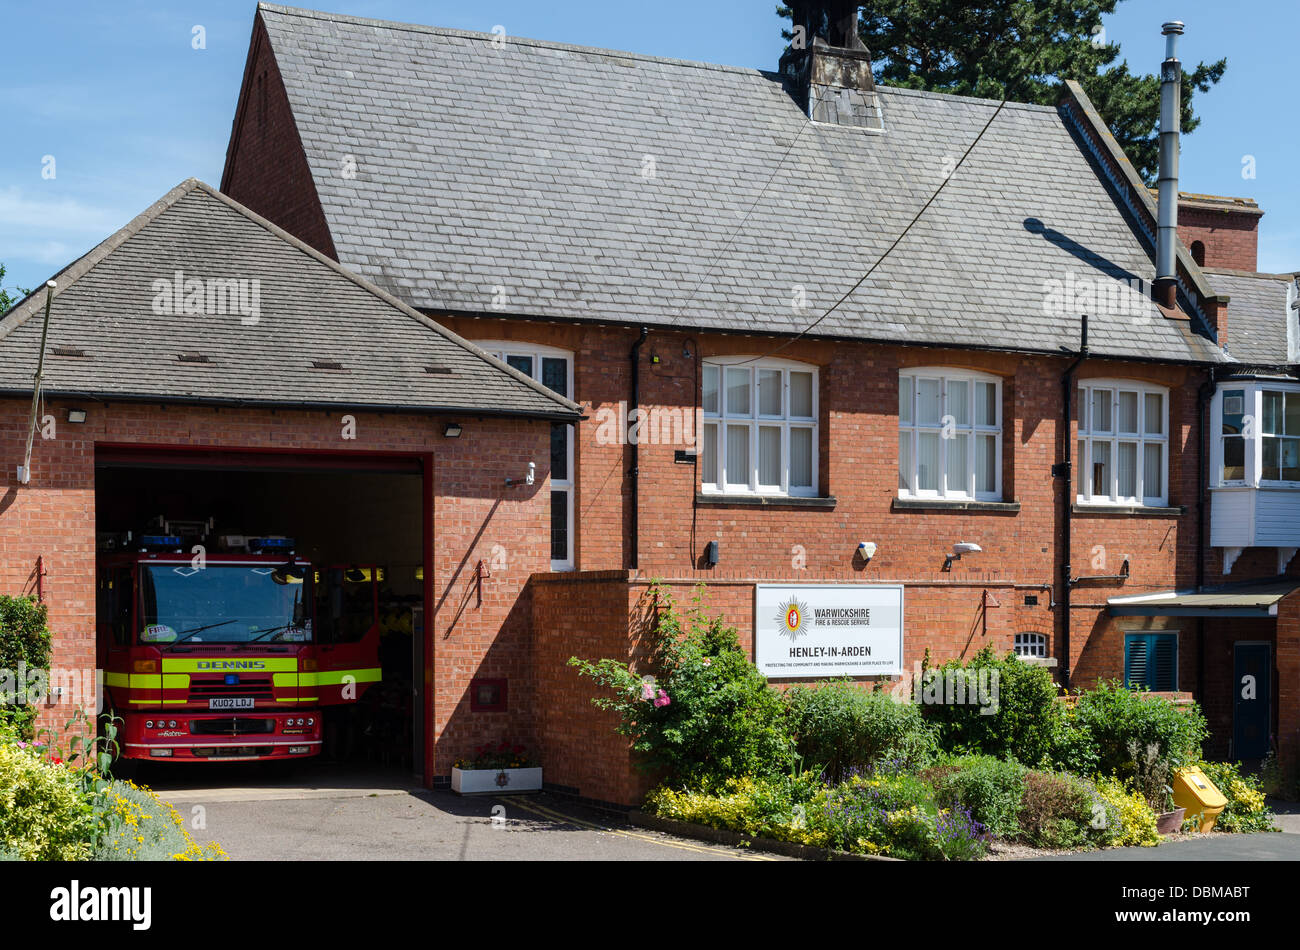 Warwickshire Fire and Rescue Service in Henley-in-Arden, Warwickshire Stock Photo